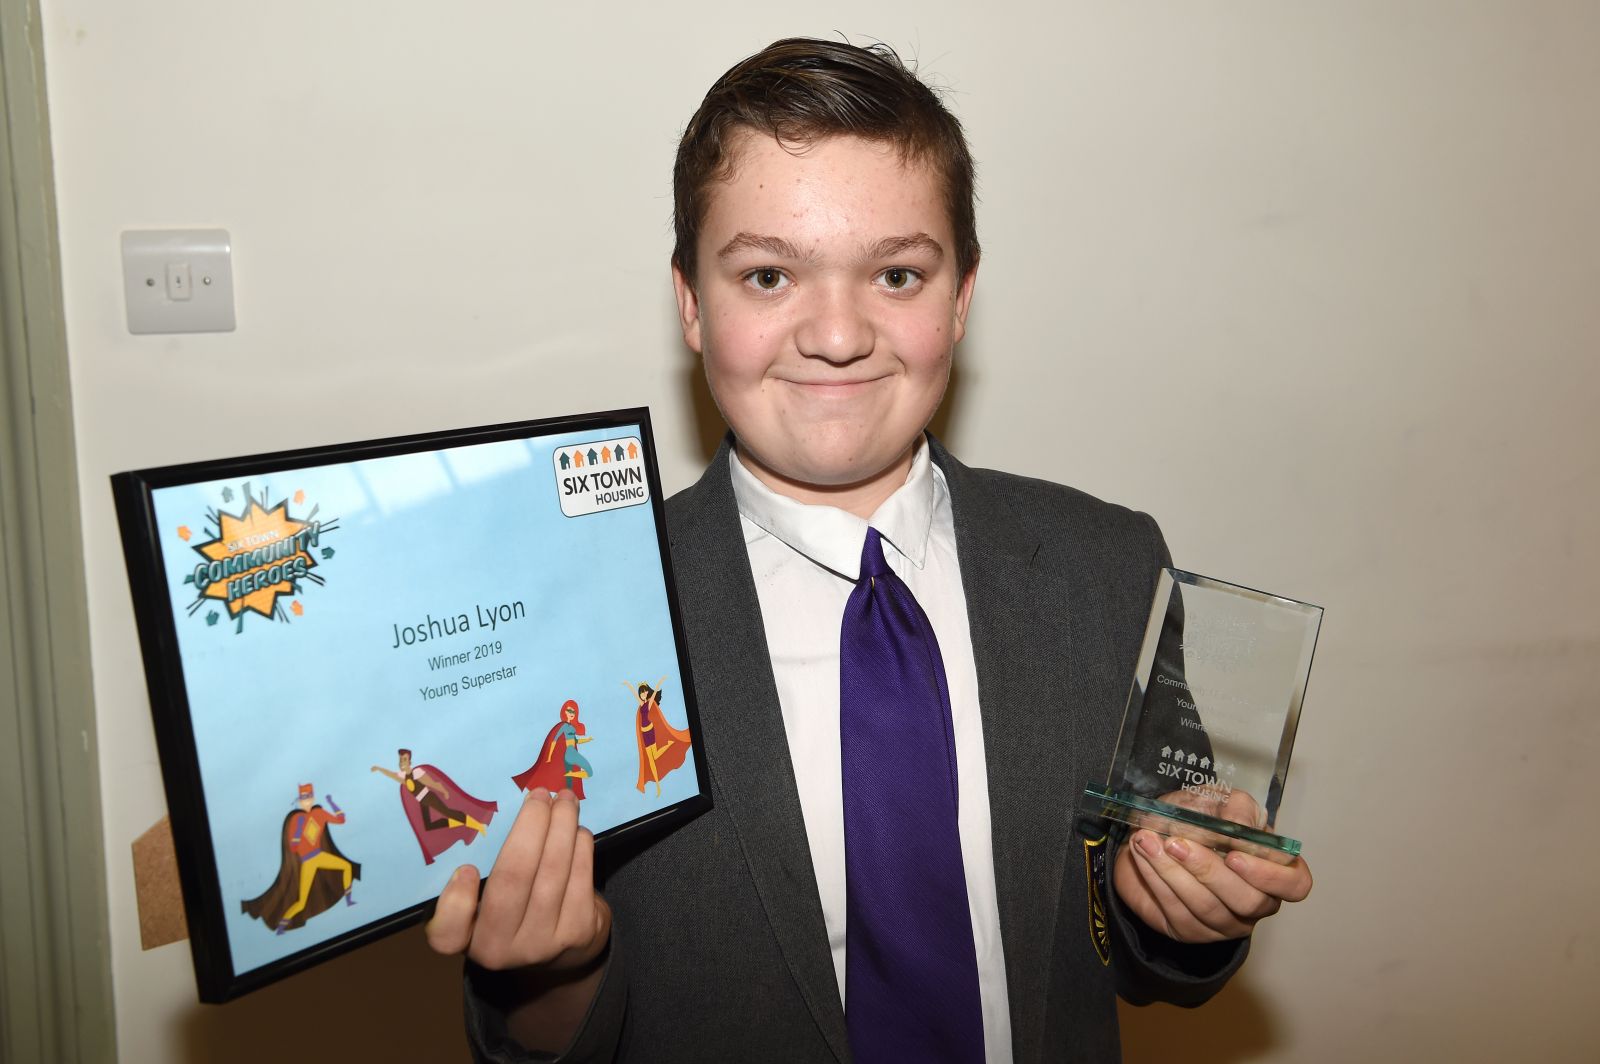 Joshua Lyon, winner of the Young Superstar award